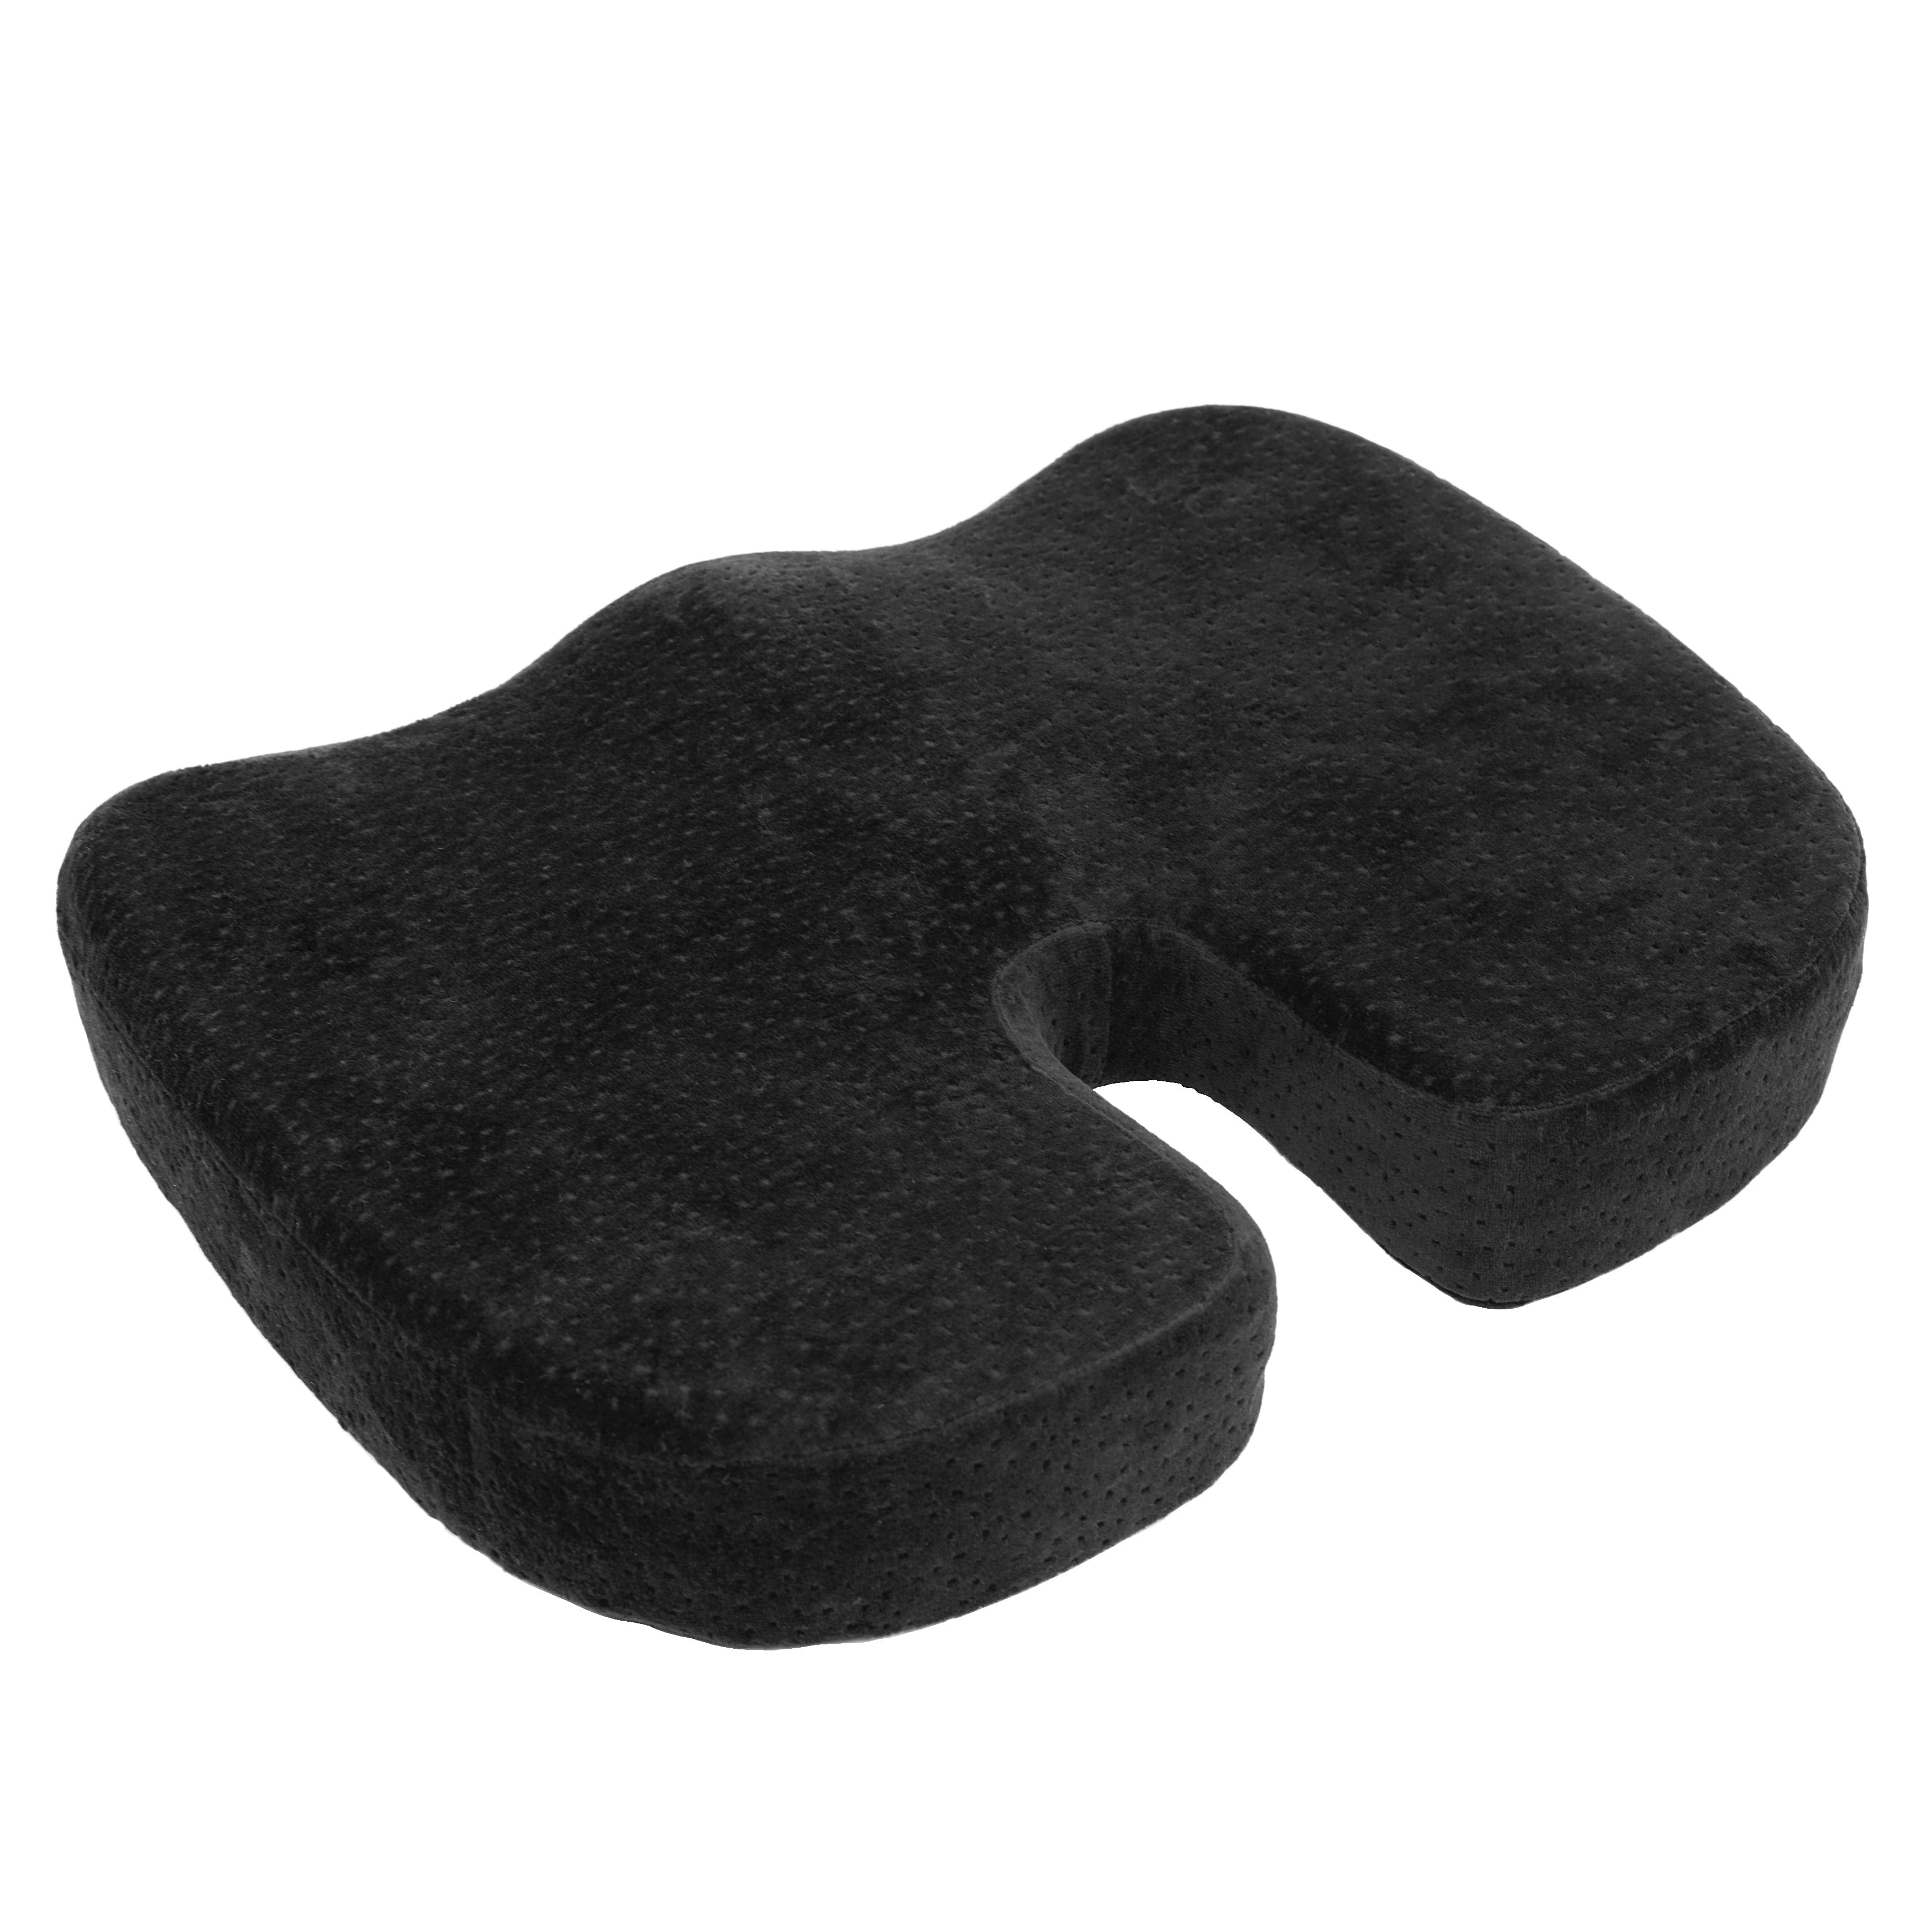 AURORA Black Memory Foam Coccyx Seat Cushion